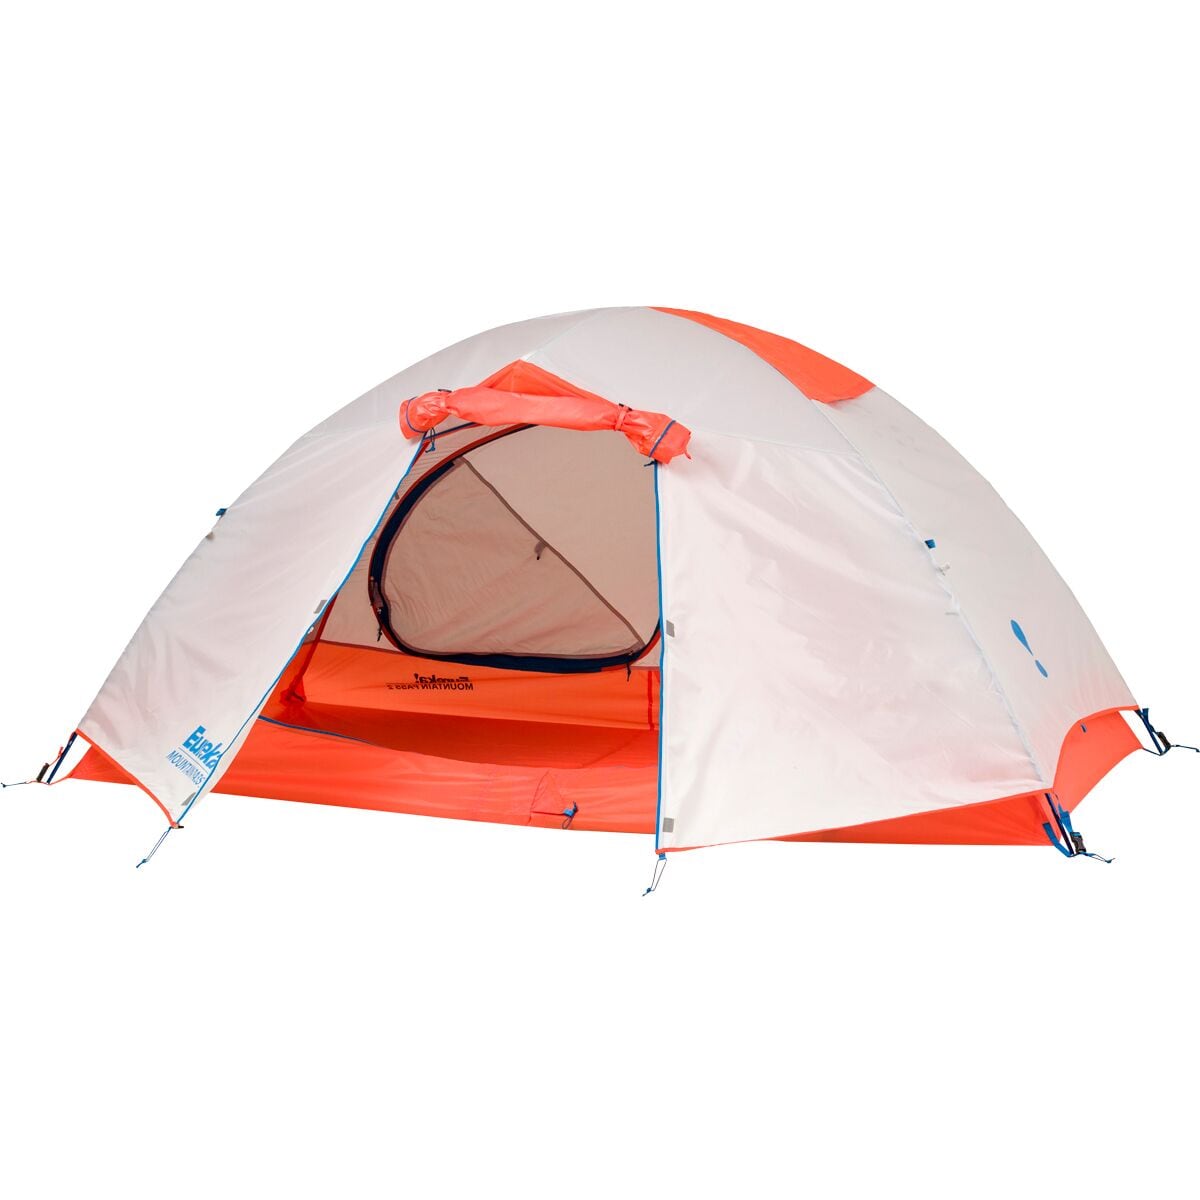 Eureka! Mountain Pass Person, Season Backpacking Tent 